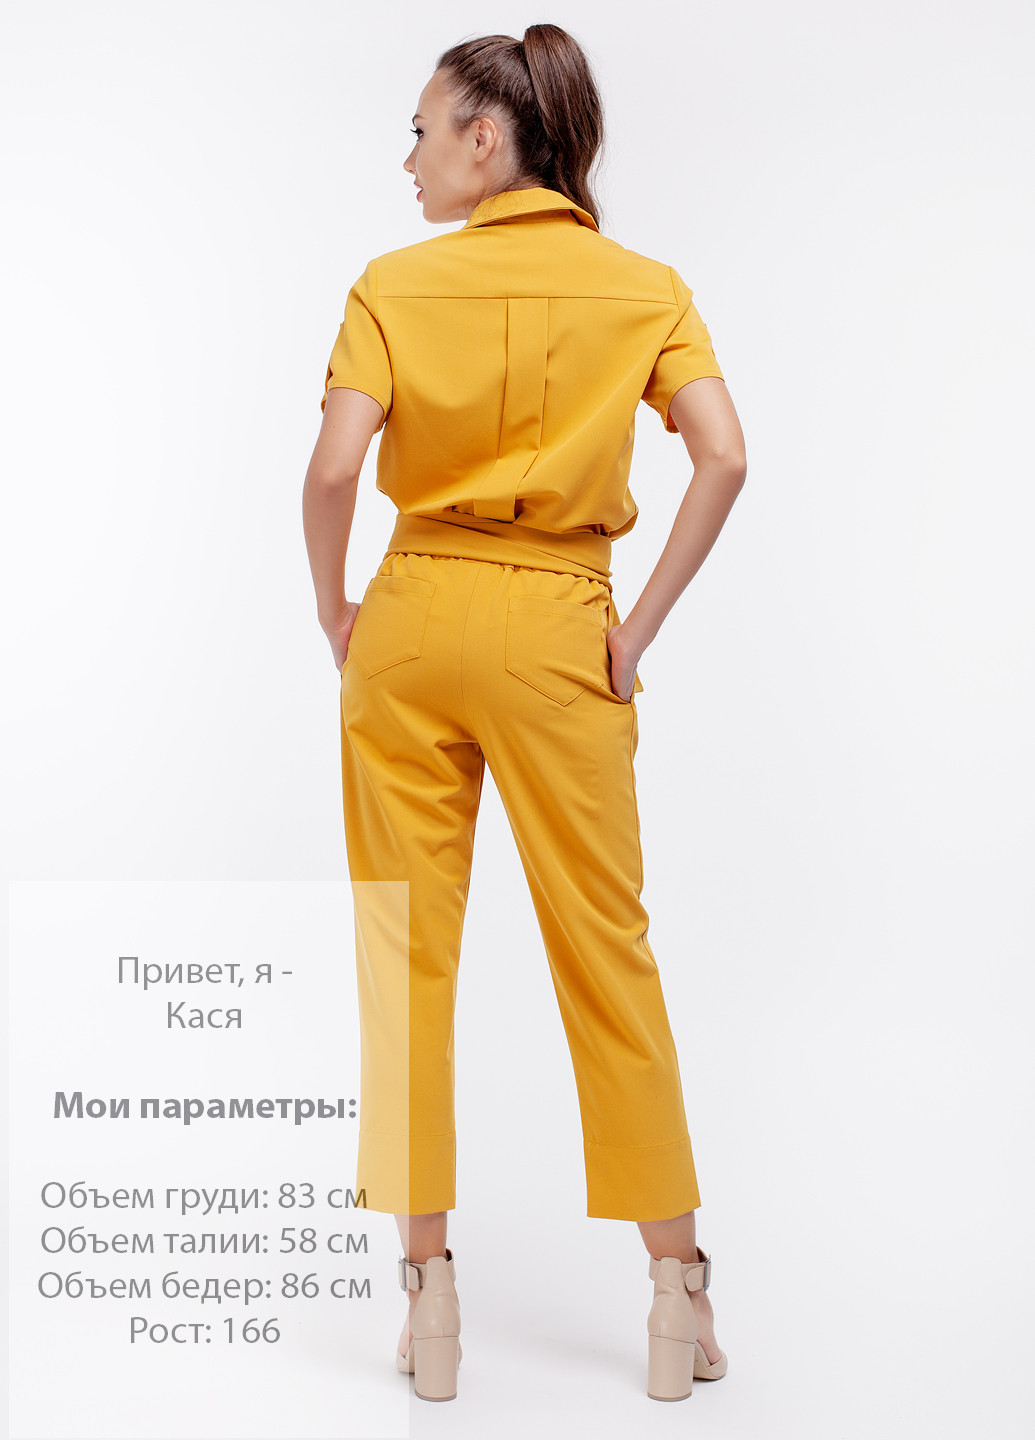 Комбинезон Nadi Renardi комбинезон-брюки однотонный жёлтый кэжуал